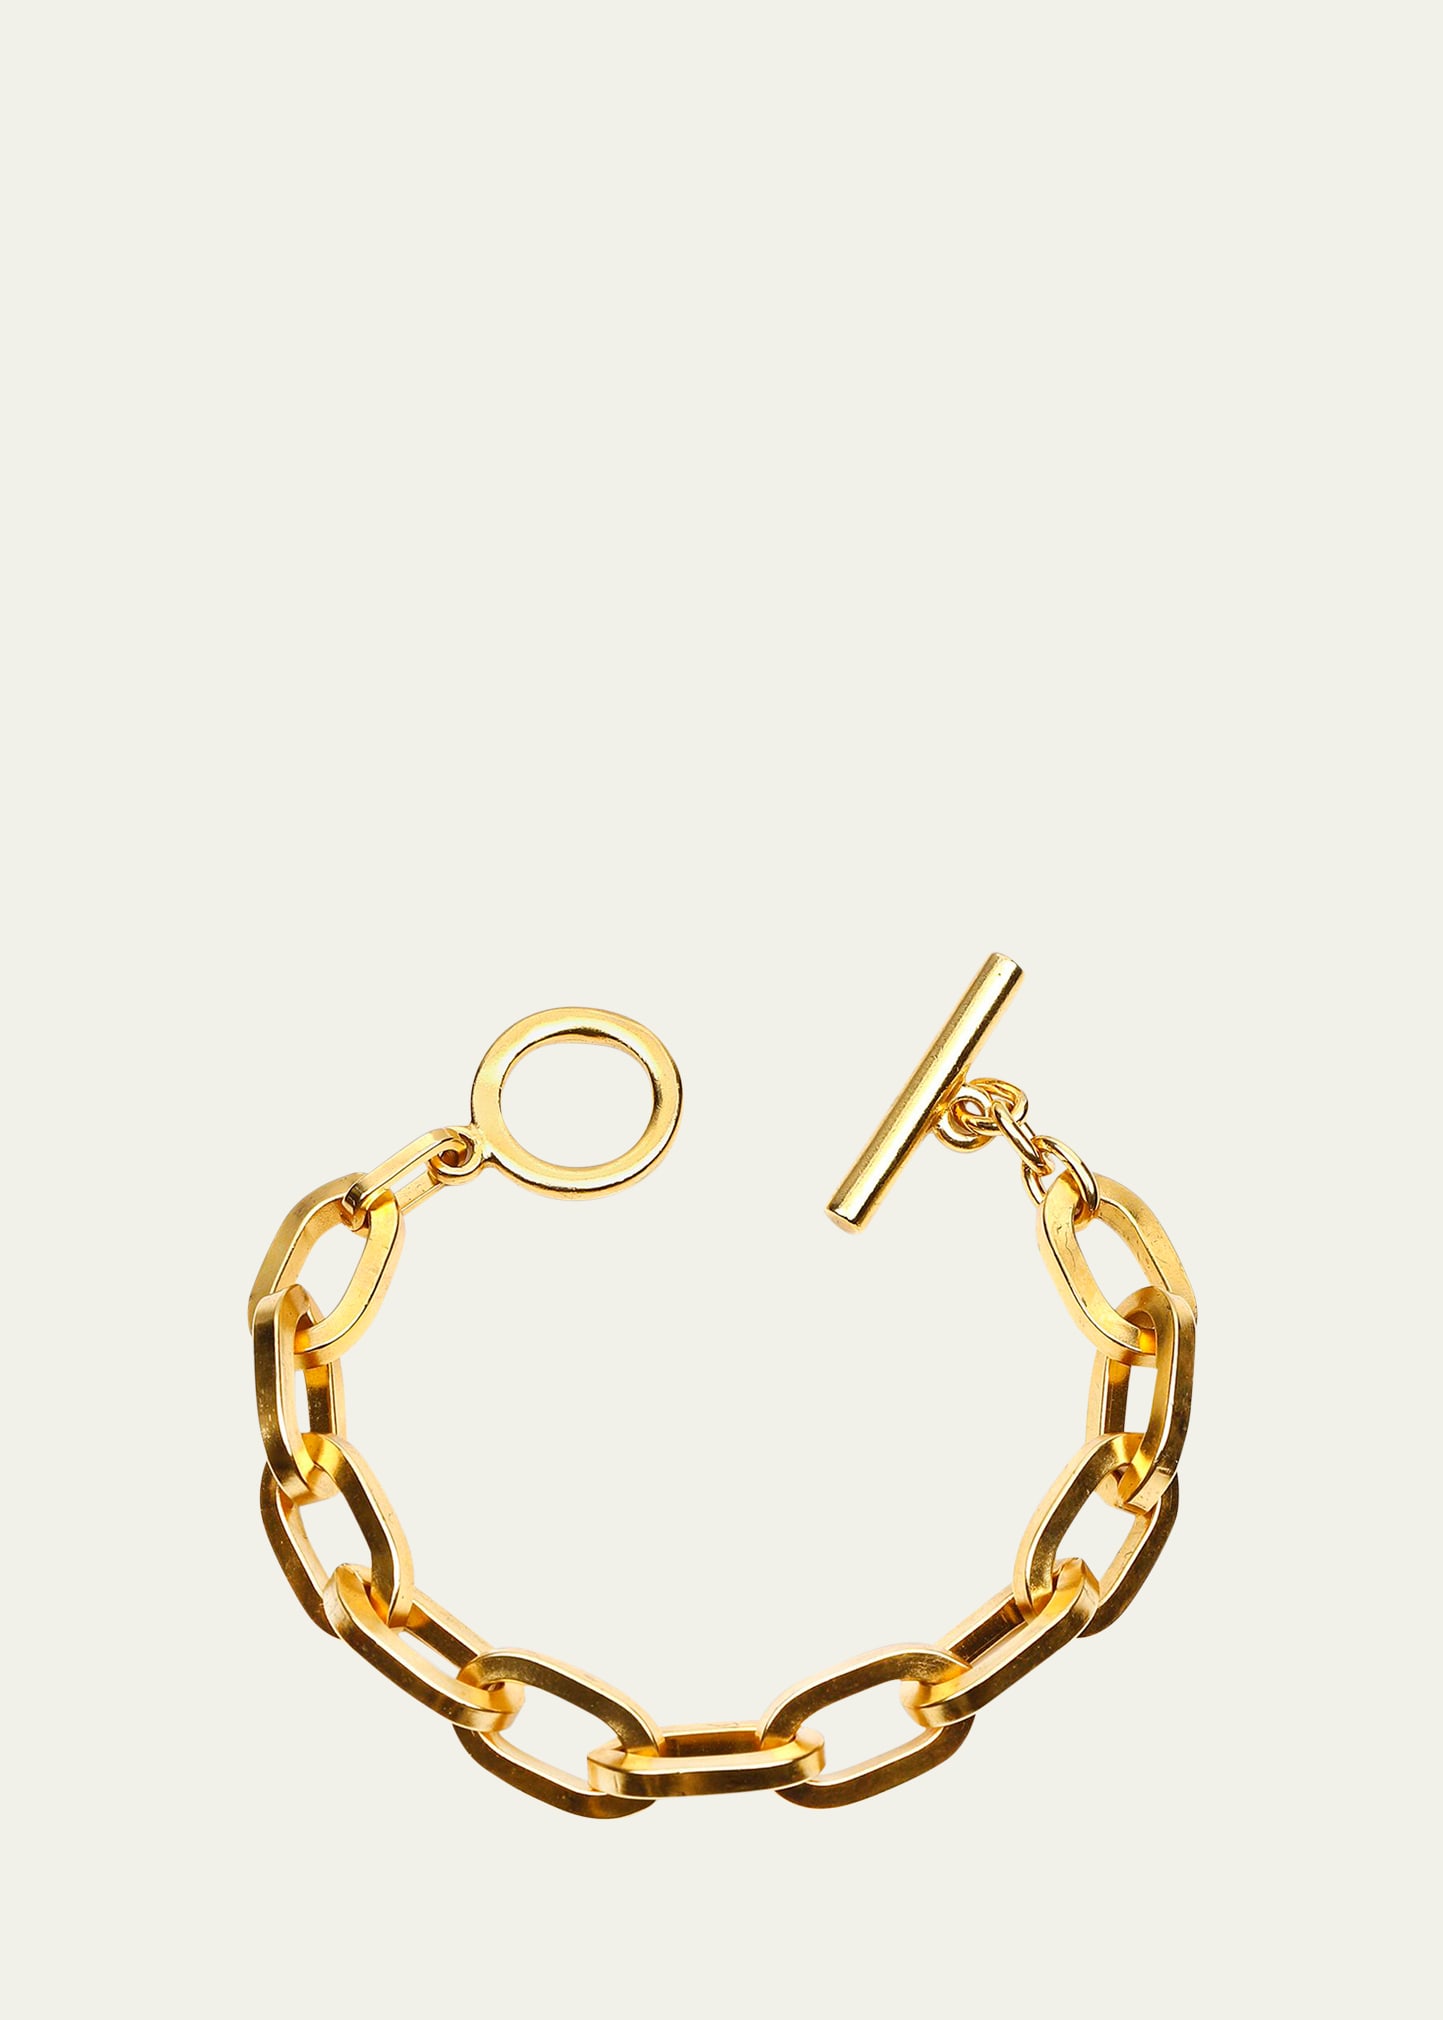 24k Gold Electroplate Oval Link Chain Bracelet